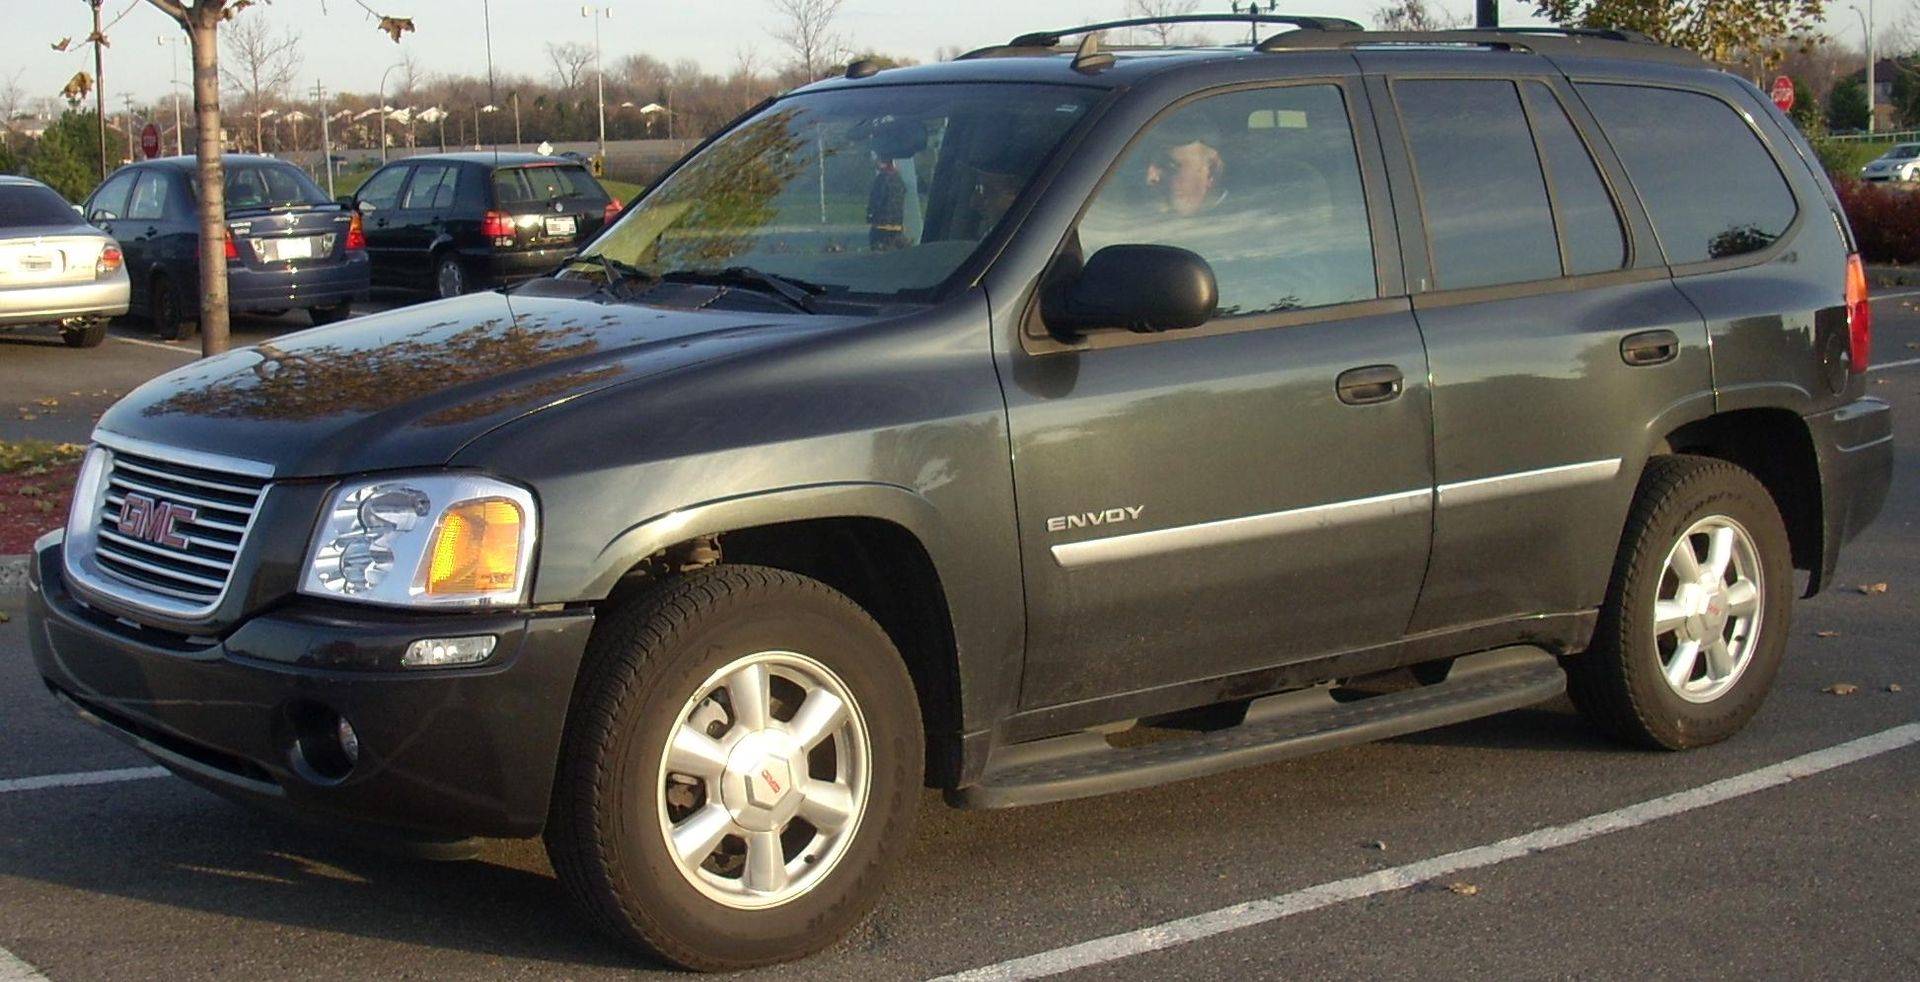 1998 GMC Envoy Base - 4dr SUV 4.3L V6 4x4 auto